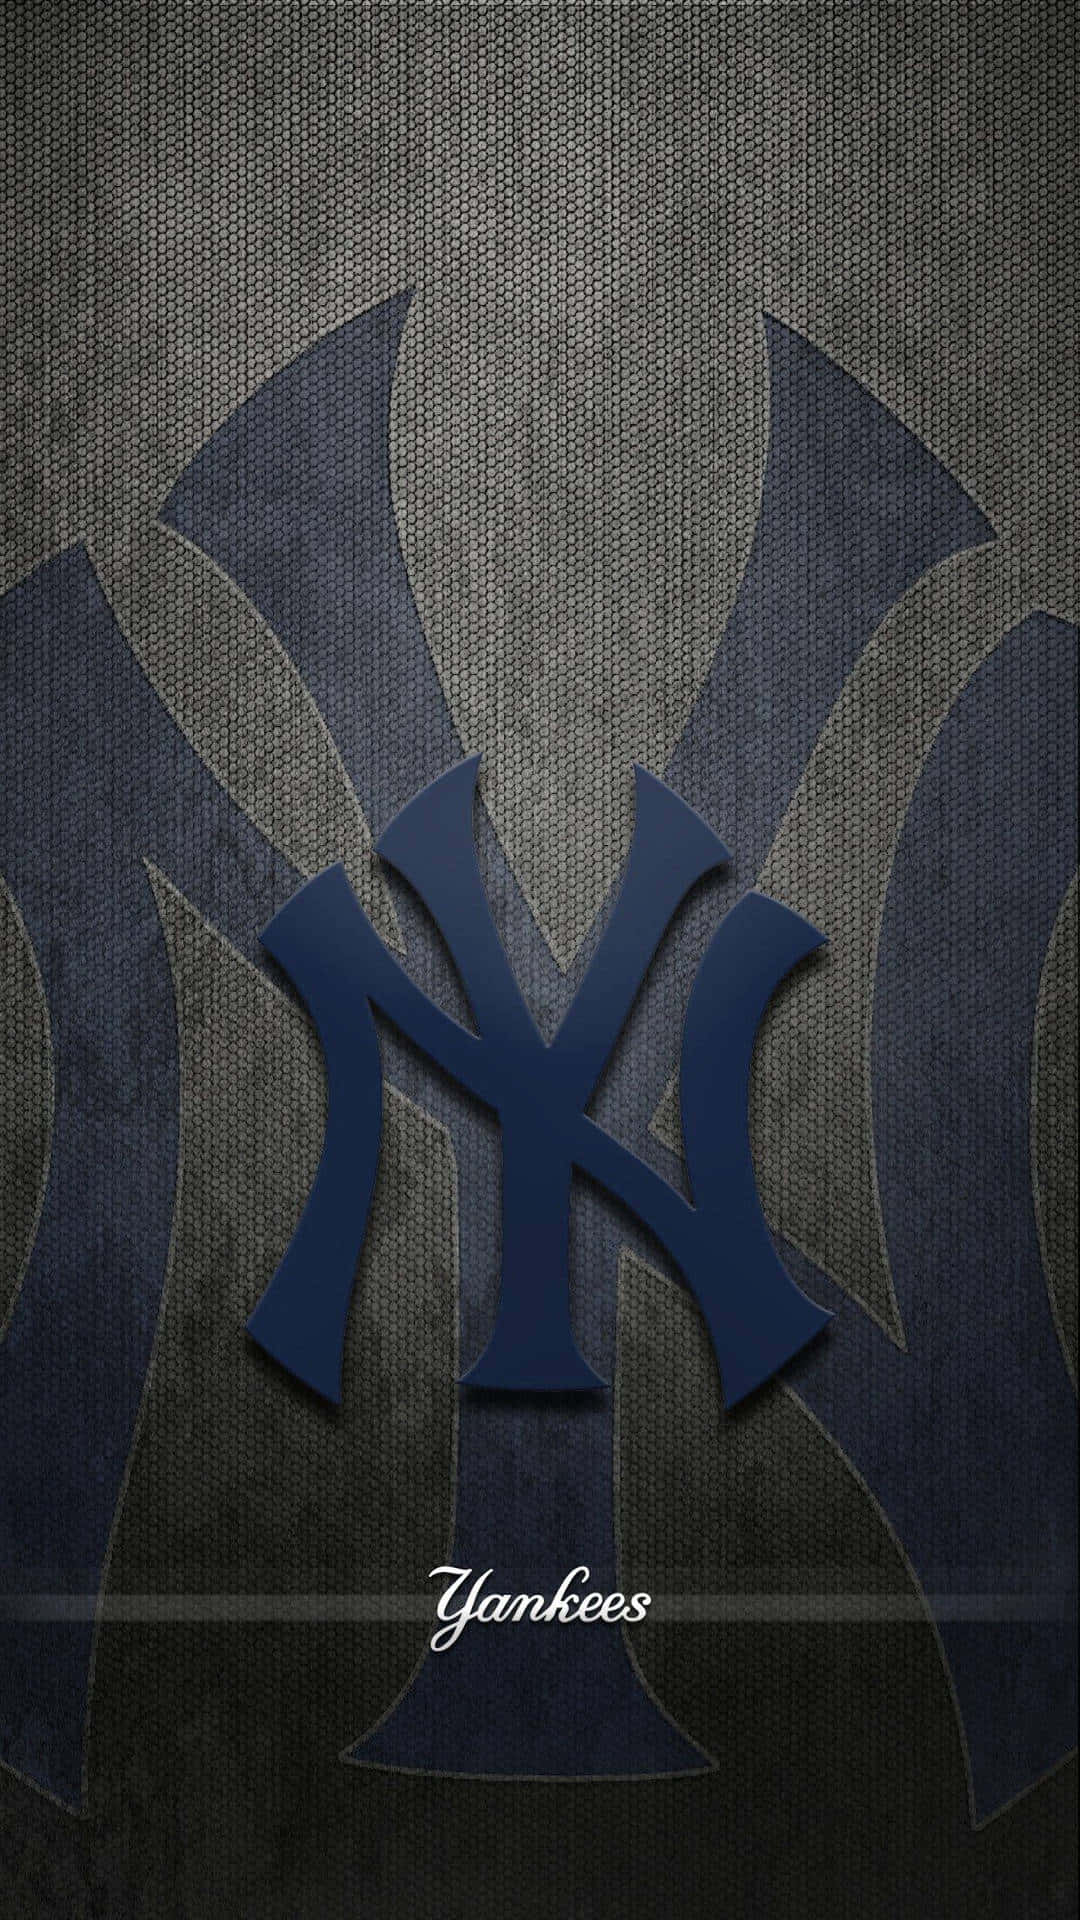 New York Yankees Home Field Wallpaper